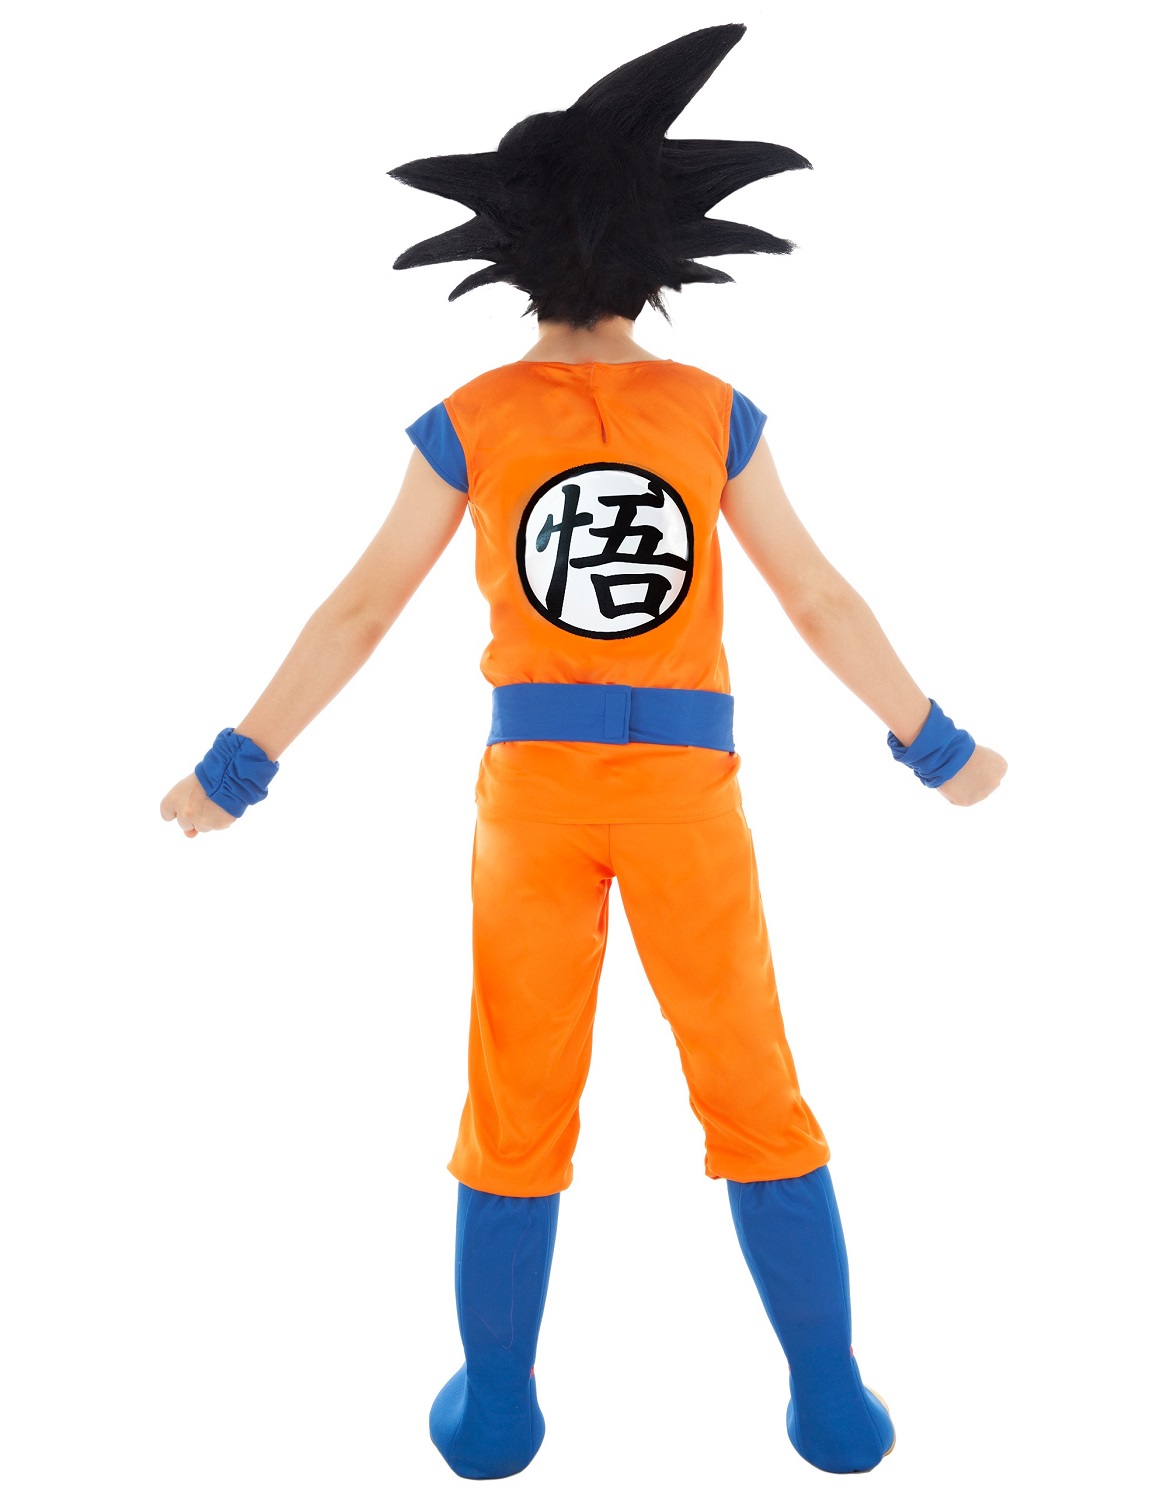 Costume Goku saiyan dbz 140cm - Chaks - Travestimenti per bambini